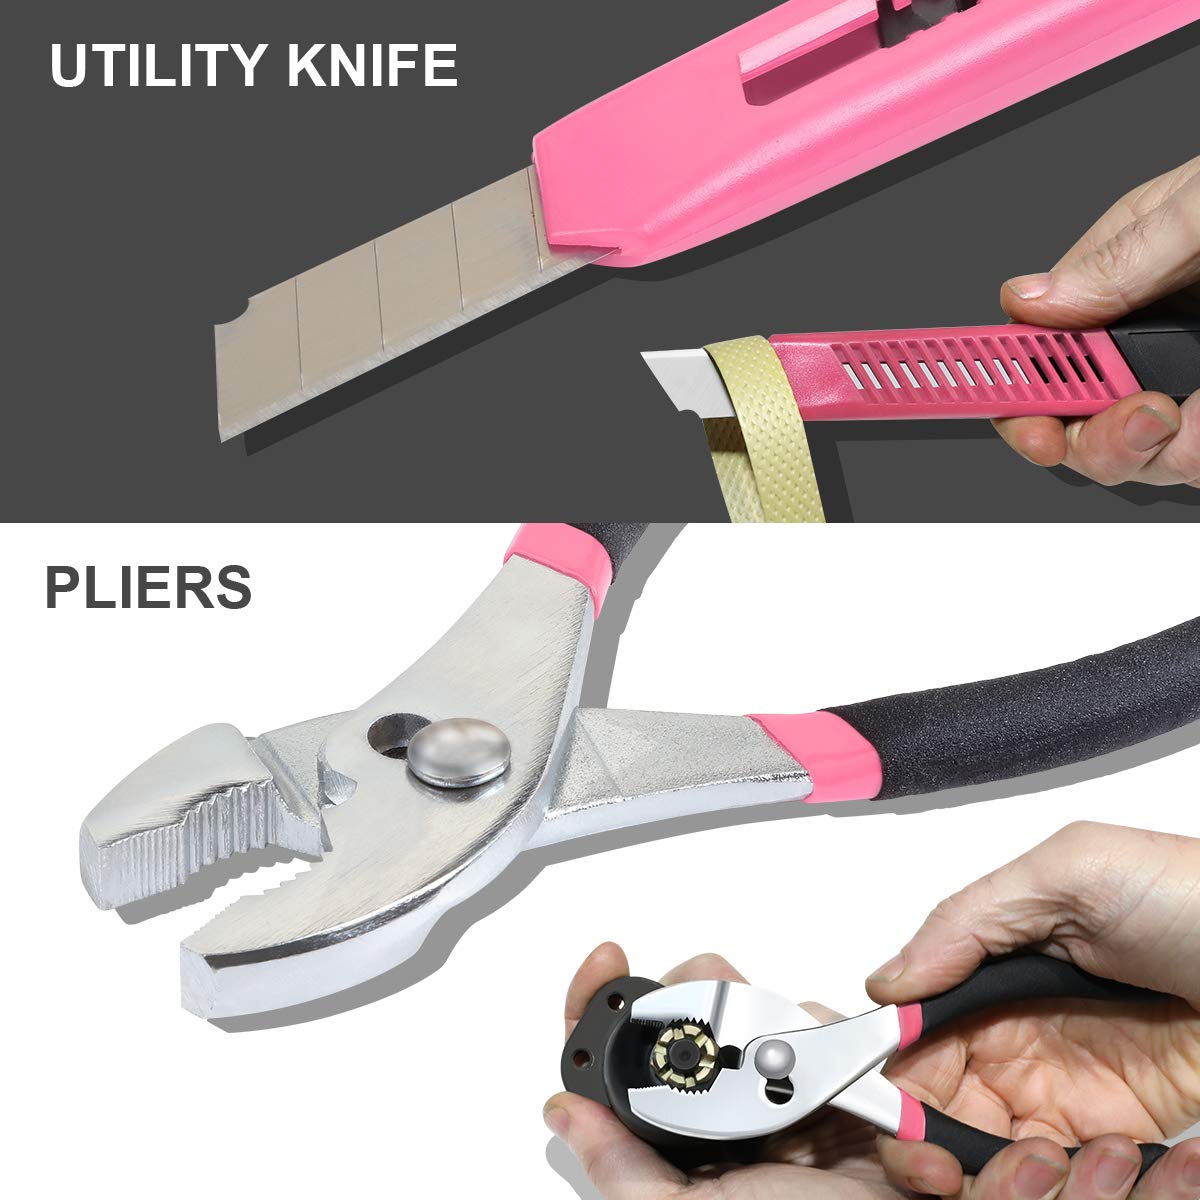 DNA MOTORING Pink 39 PCs Portable TooL Kit Household Hand Toolbox General Repair Screwdriver Pliers Hammer Hex (TOOLS-00009)